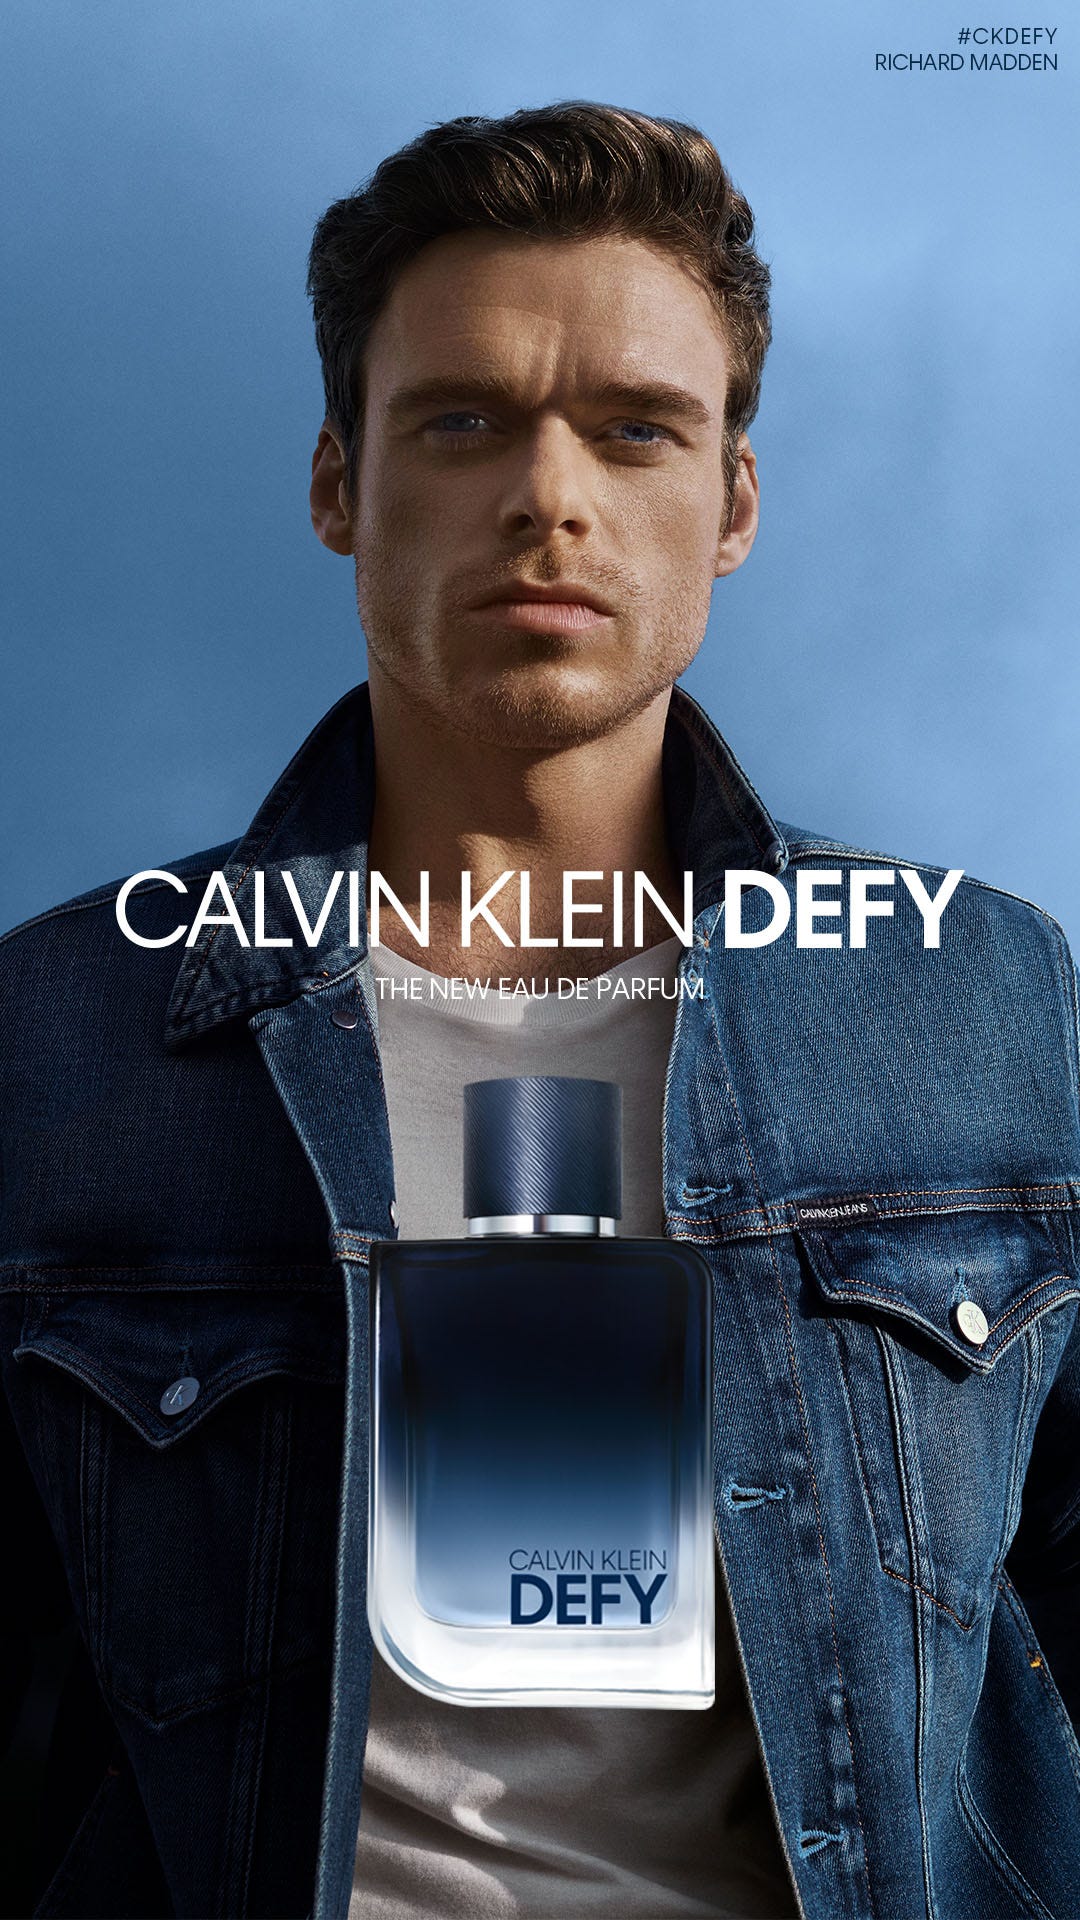 Dare to Defy: Introducing the New Calvin Klein Defy Eau de Parfum ...